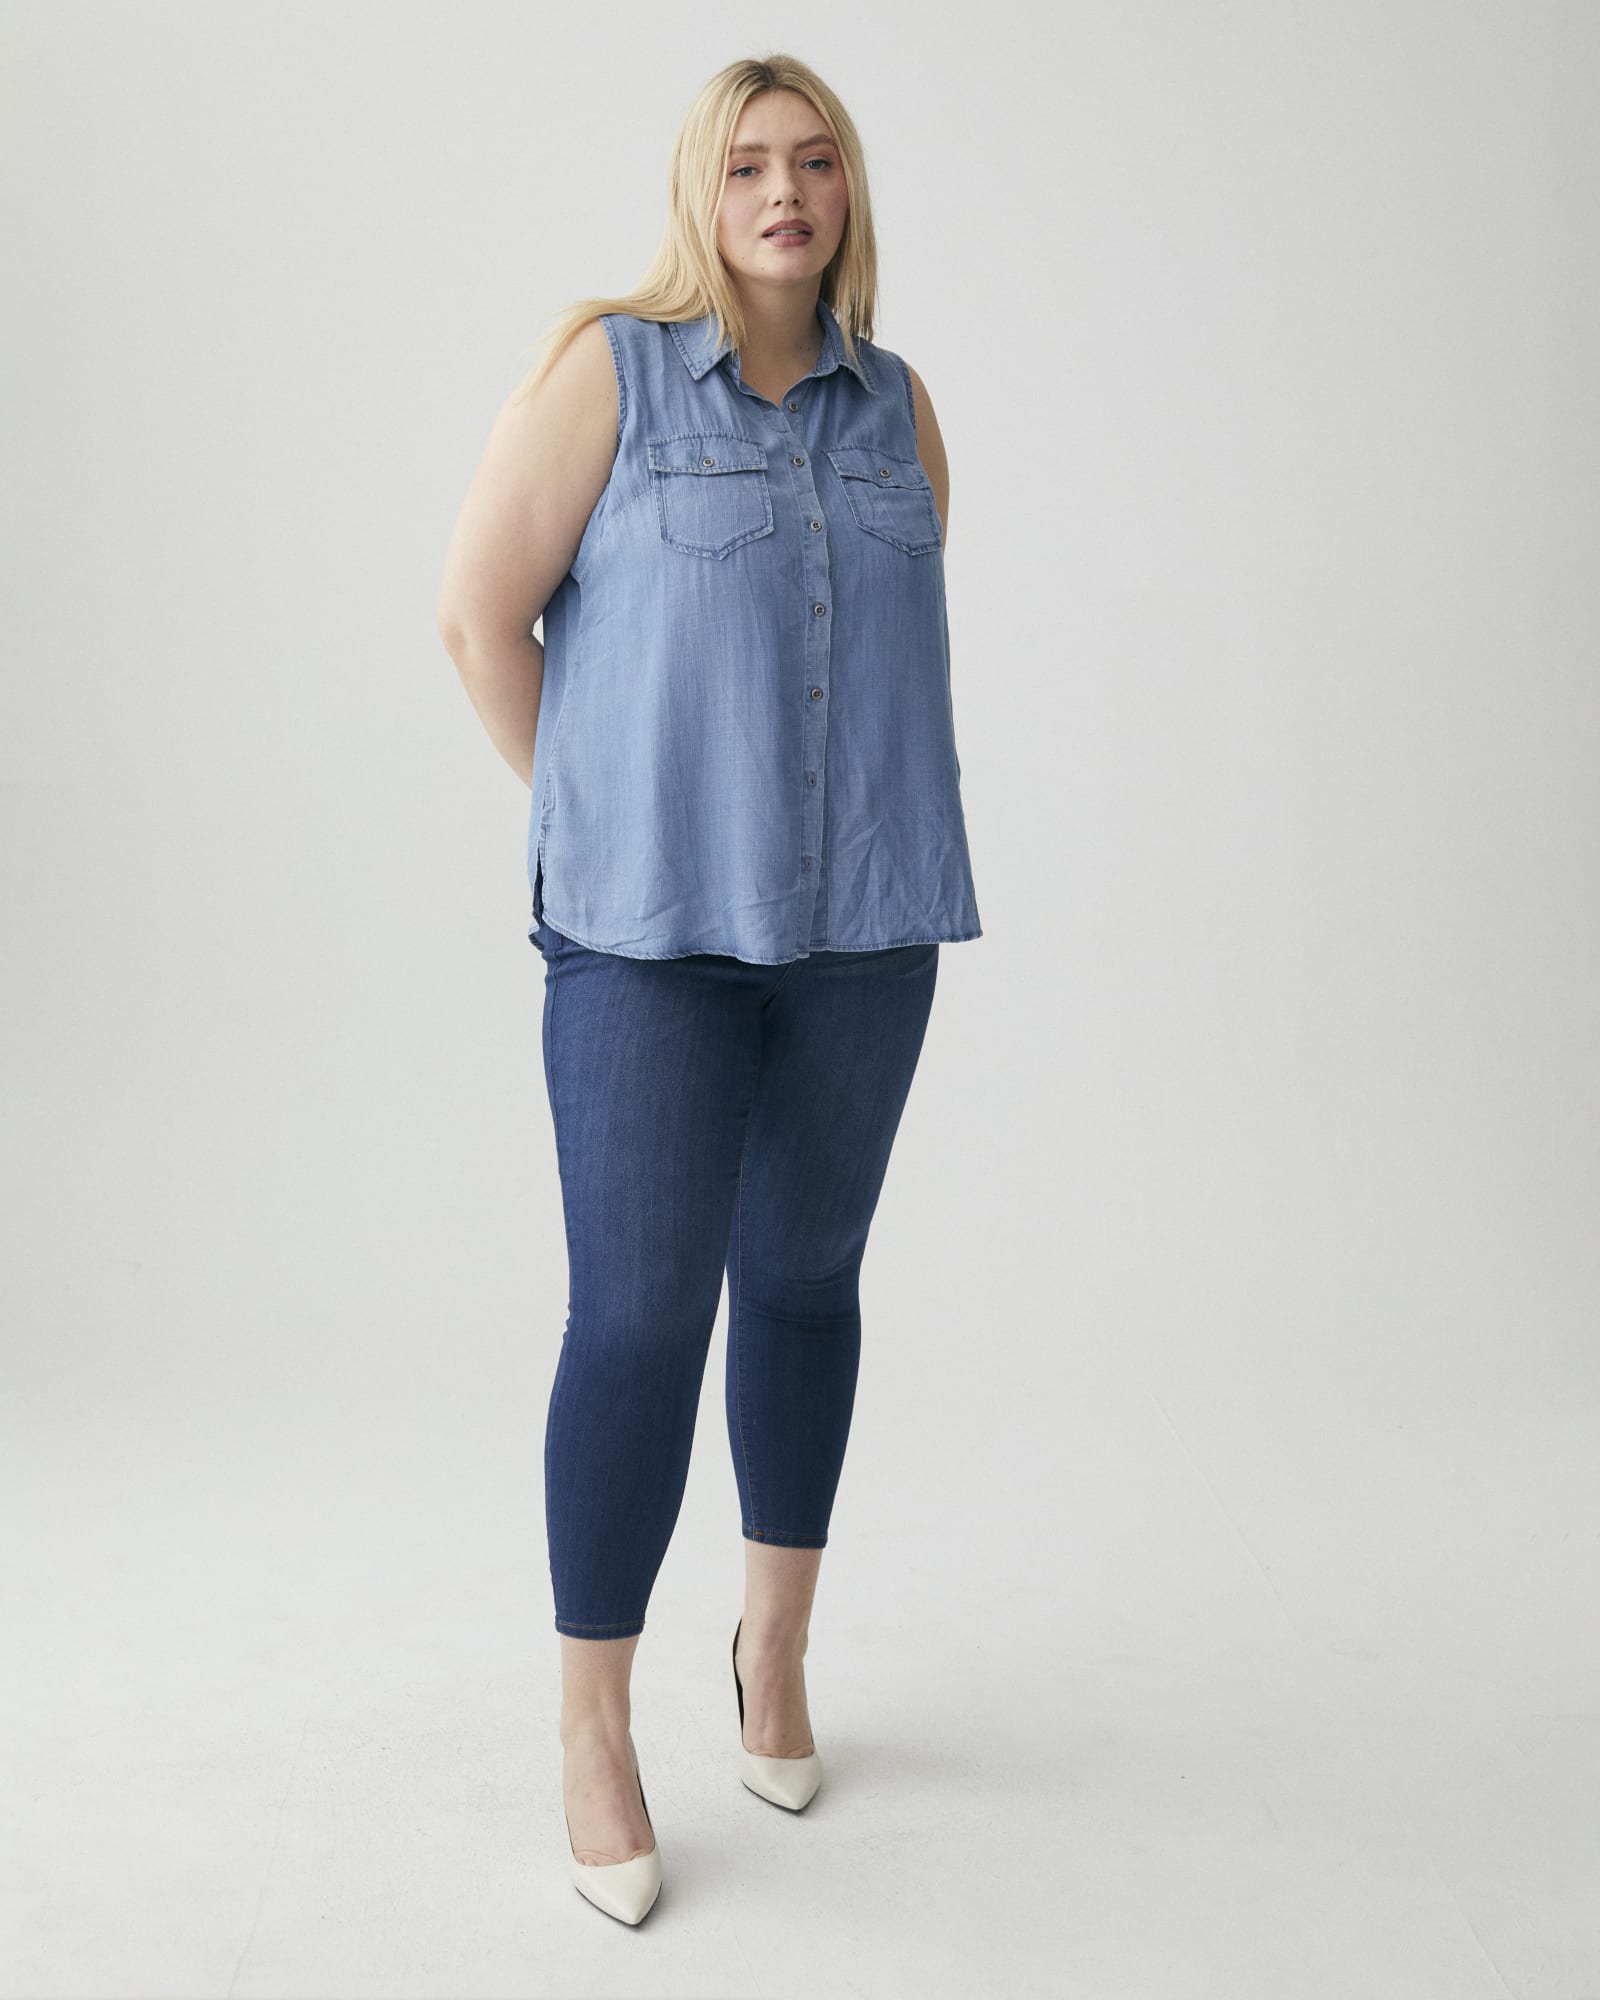 Instafab Plus Size Women Stylish Shaded Casual Navy Blue Jeans